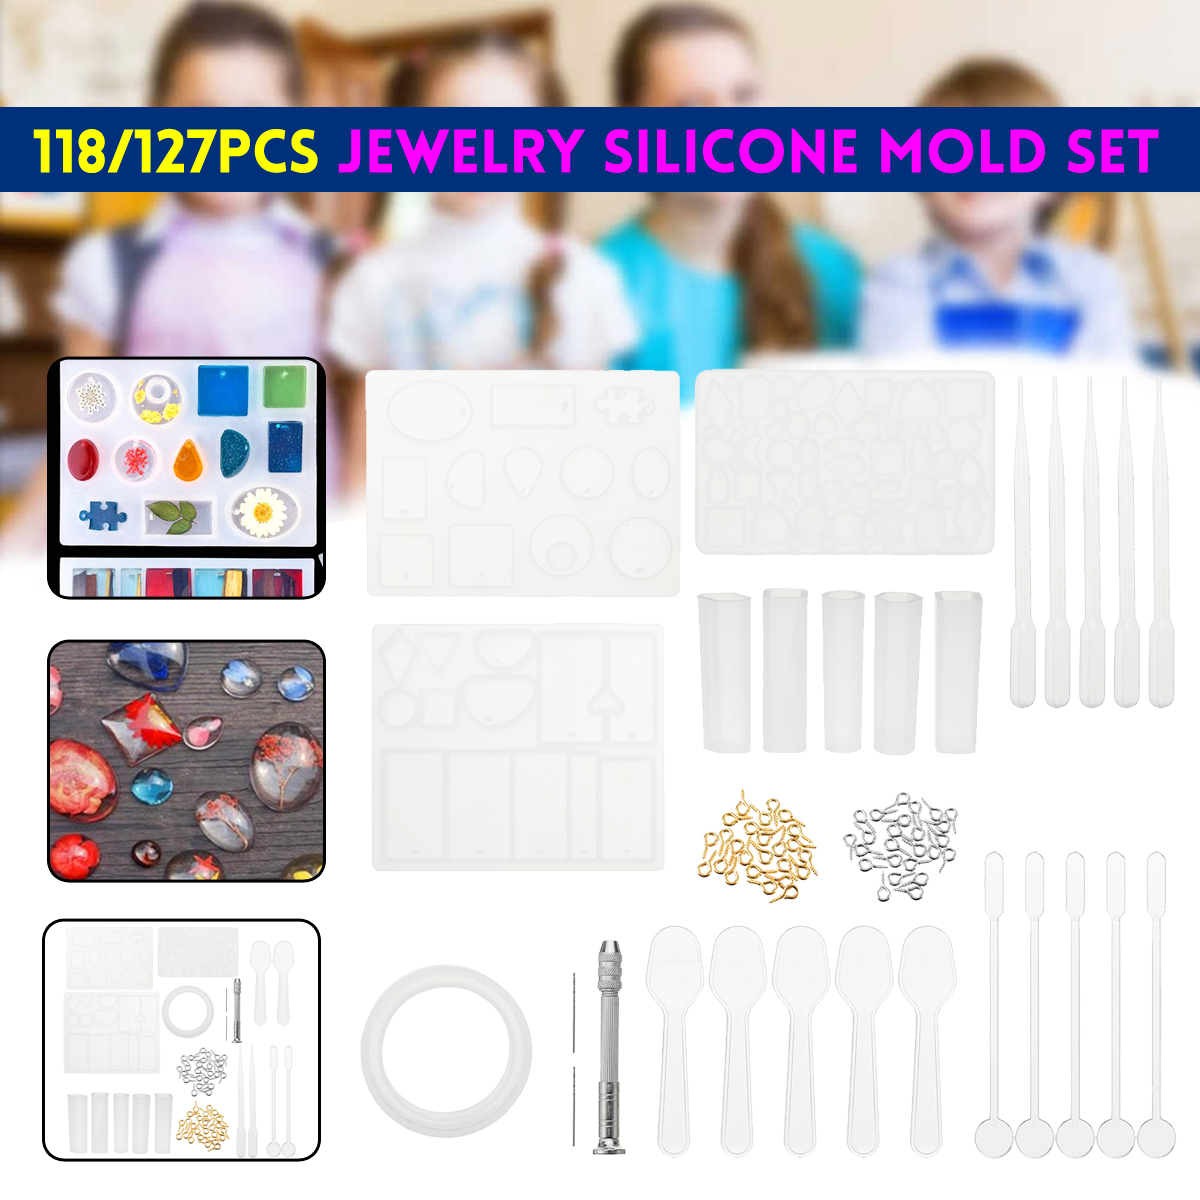 118127Pcs-Bangle-Pendant-Jewelry-Silicone-Mold-Set-Resin-Casting-Mold-Craft-DIY-1677398-1